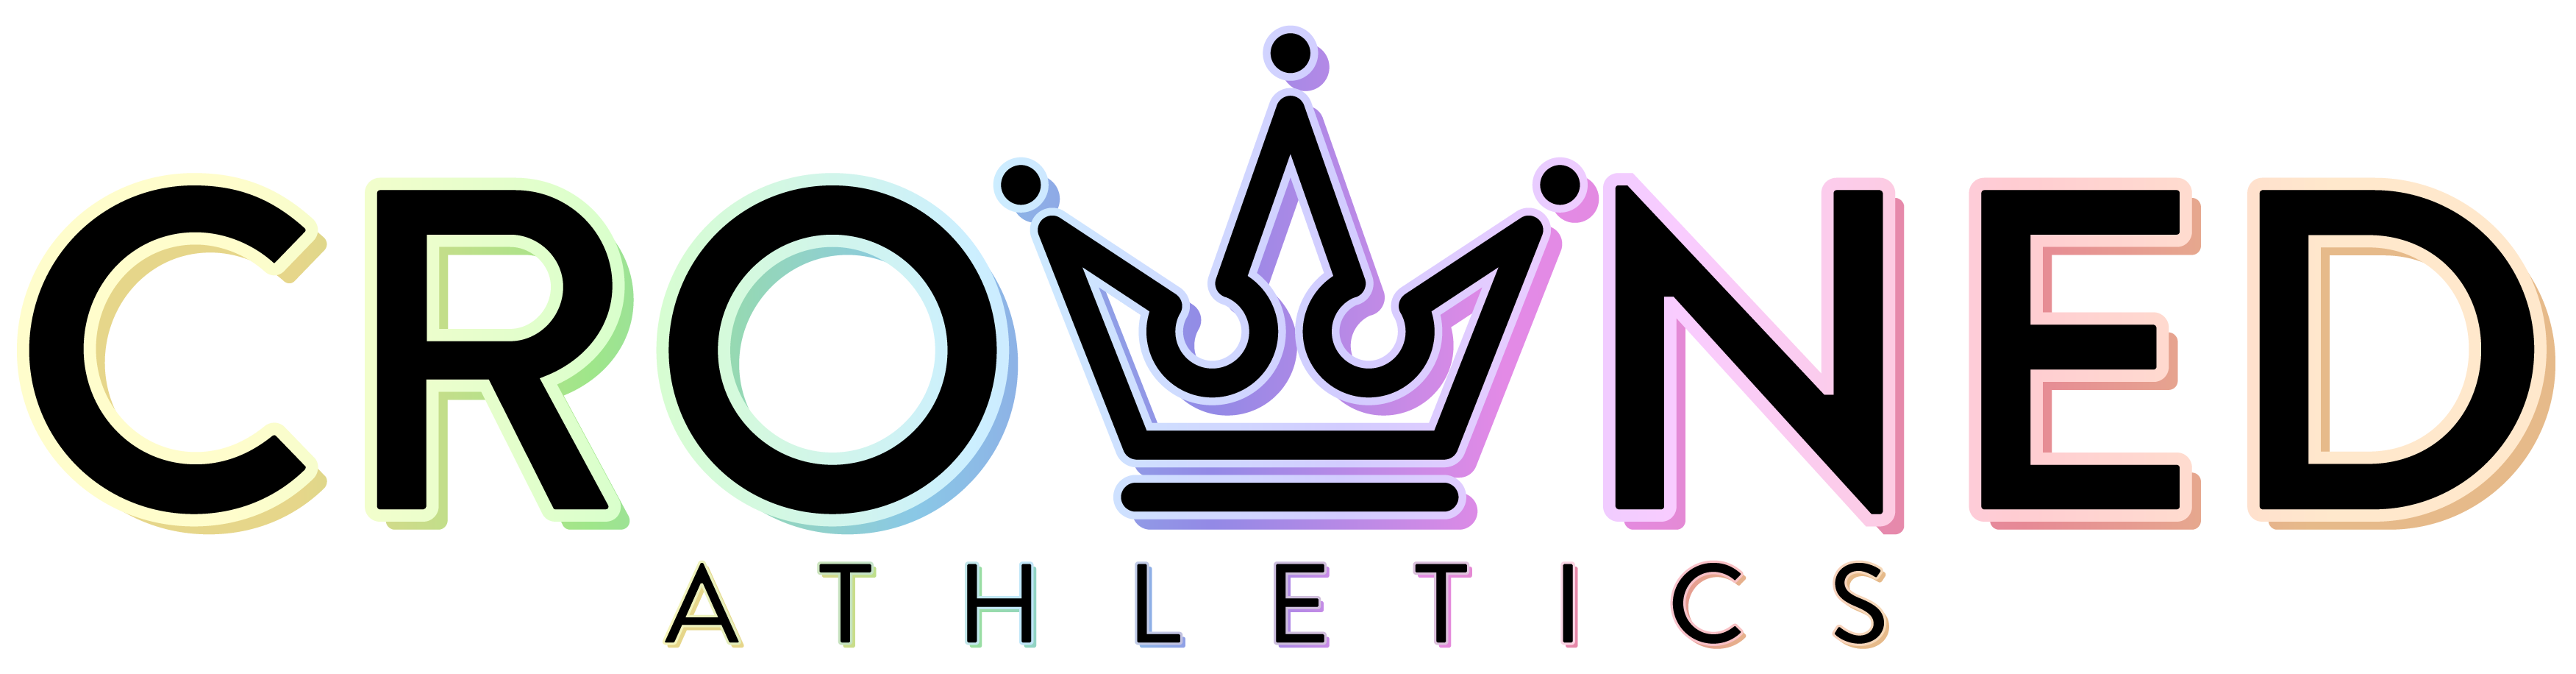 Crowned Athletics™ logo